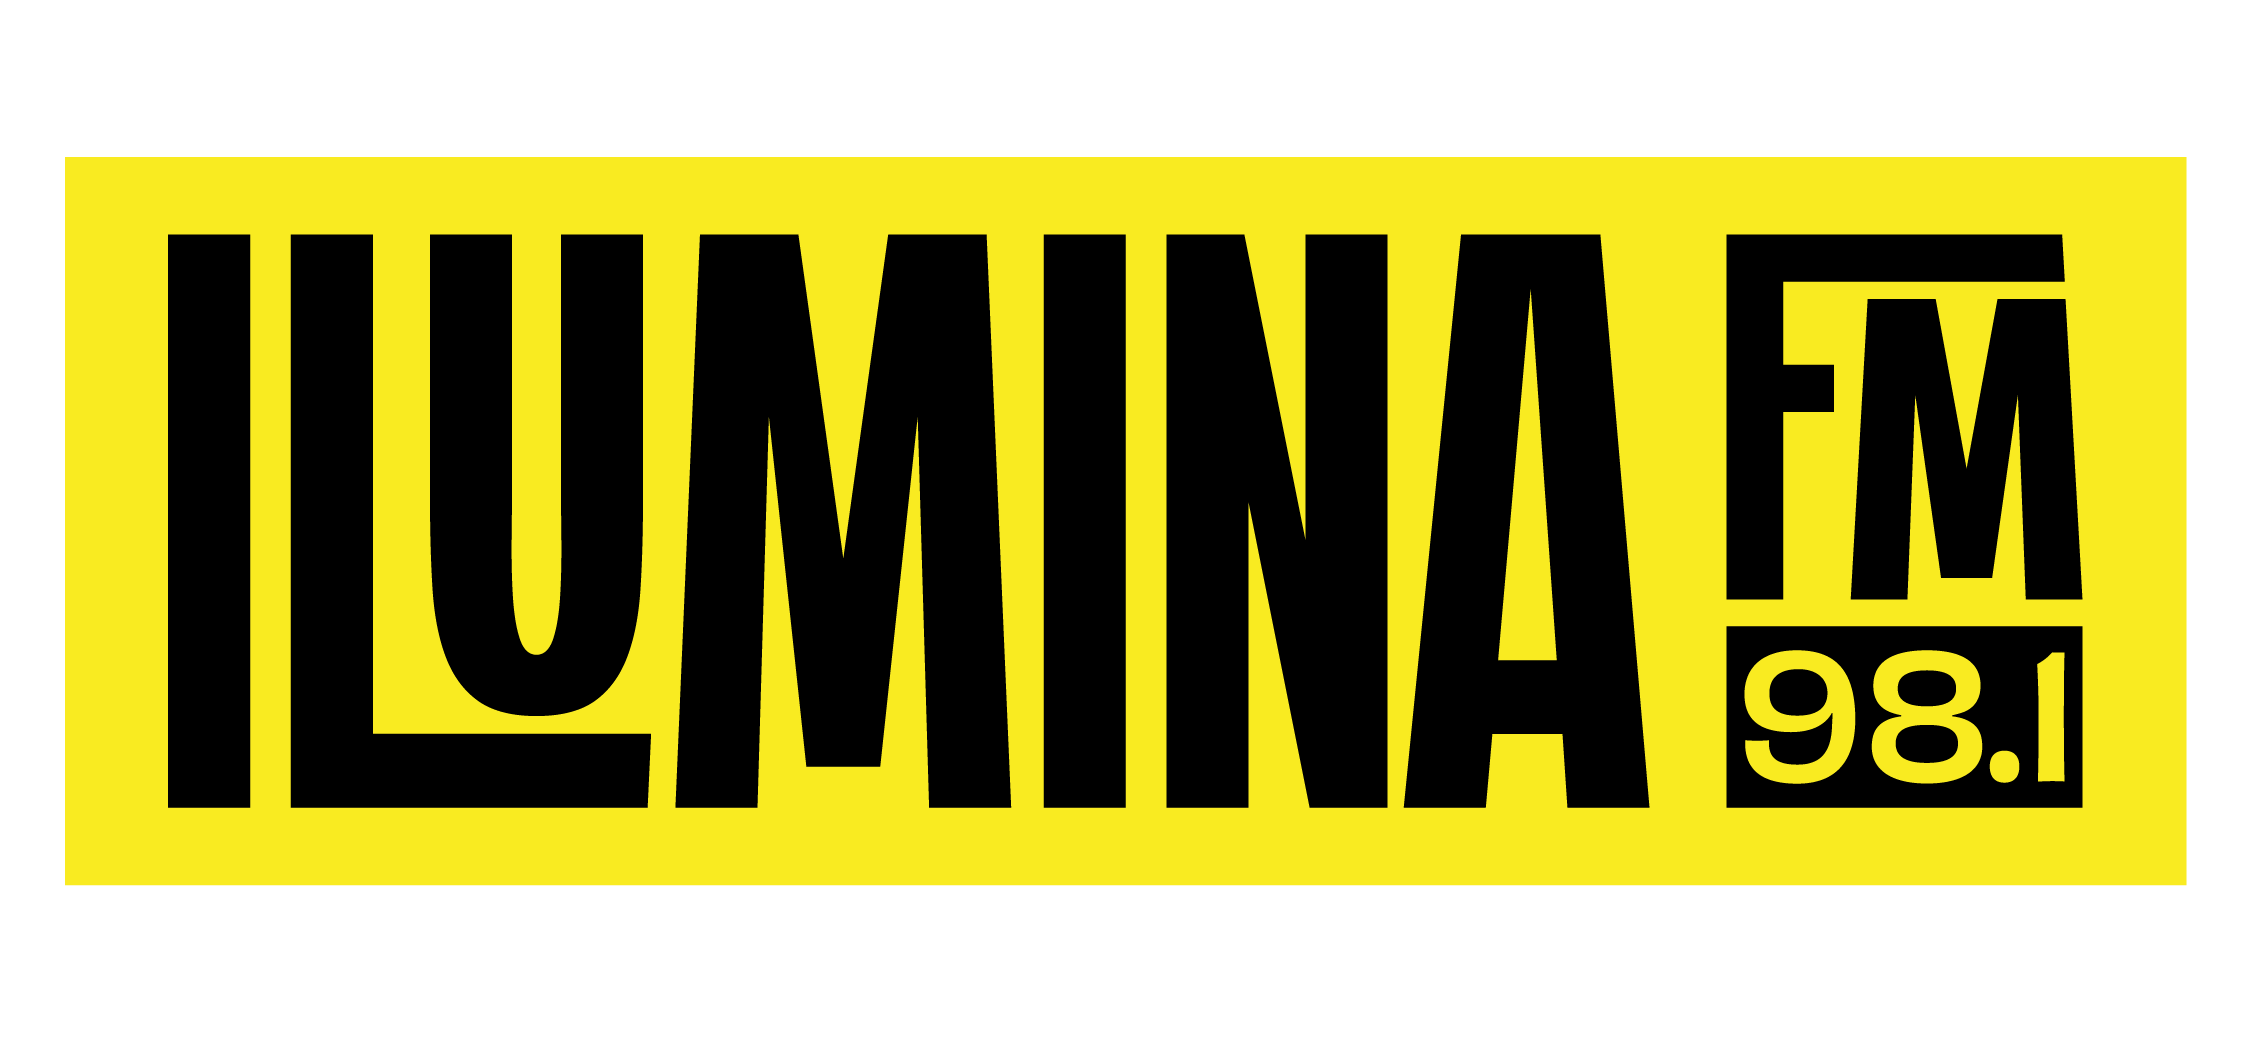 Ilumina 98.1FM